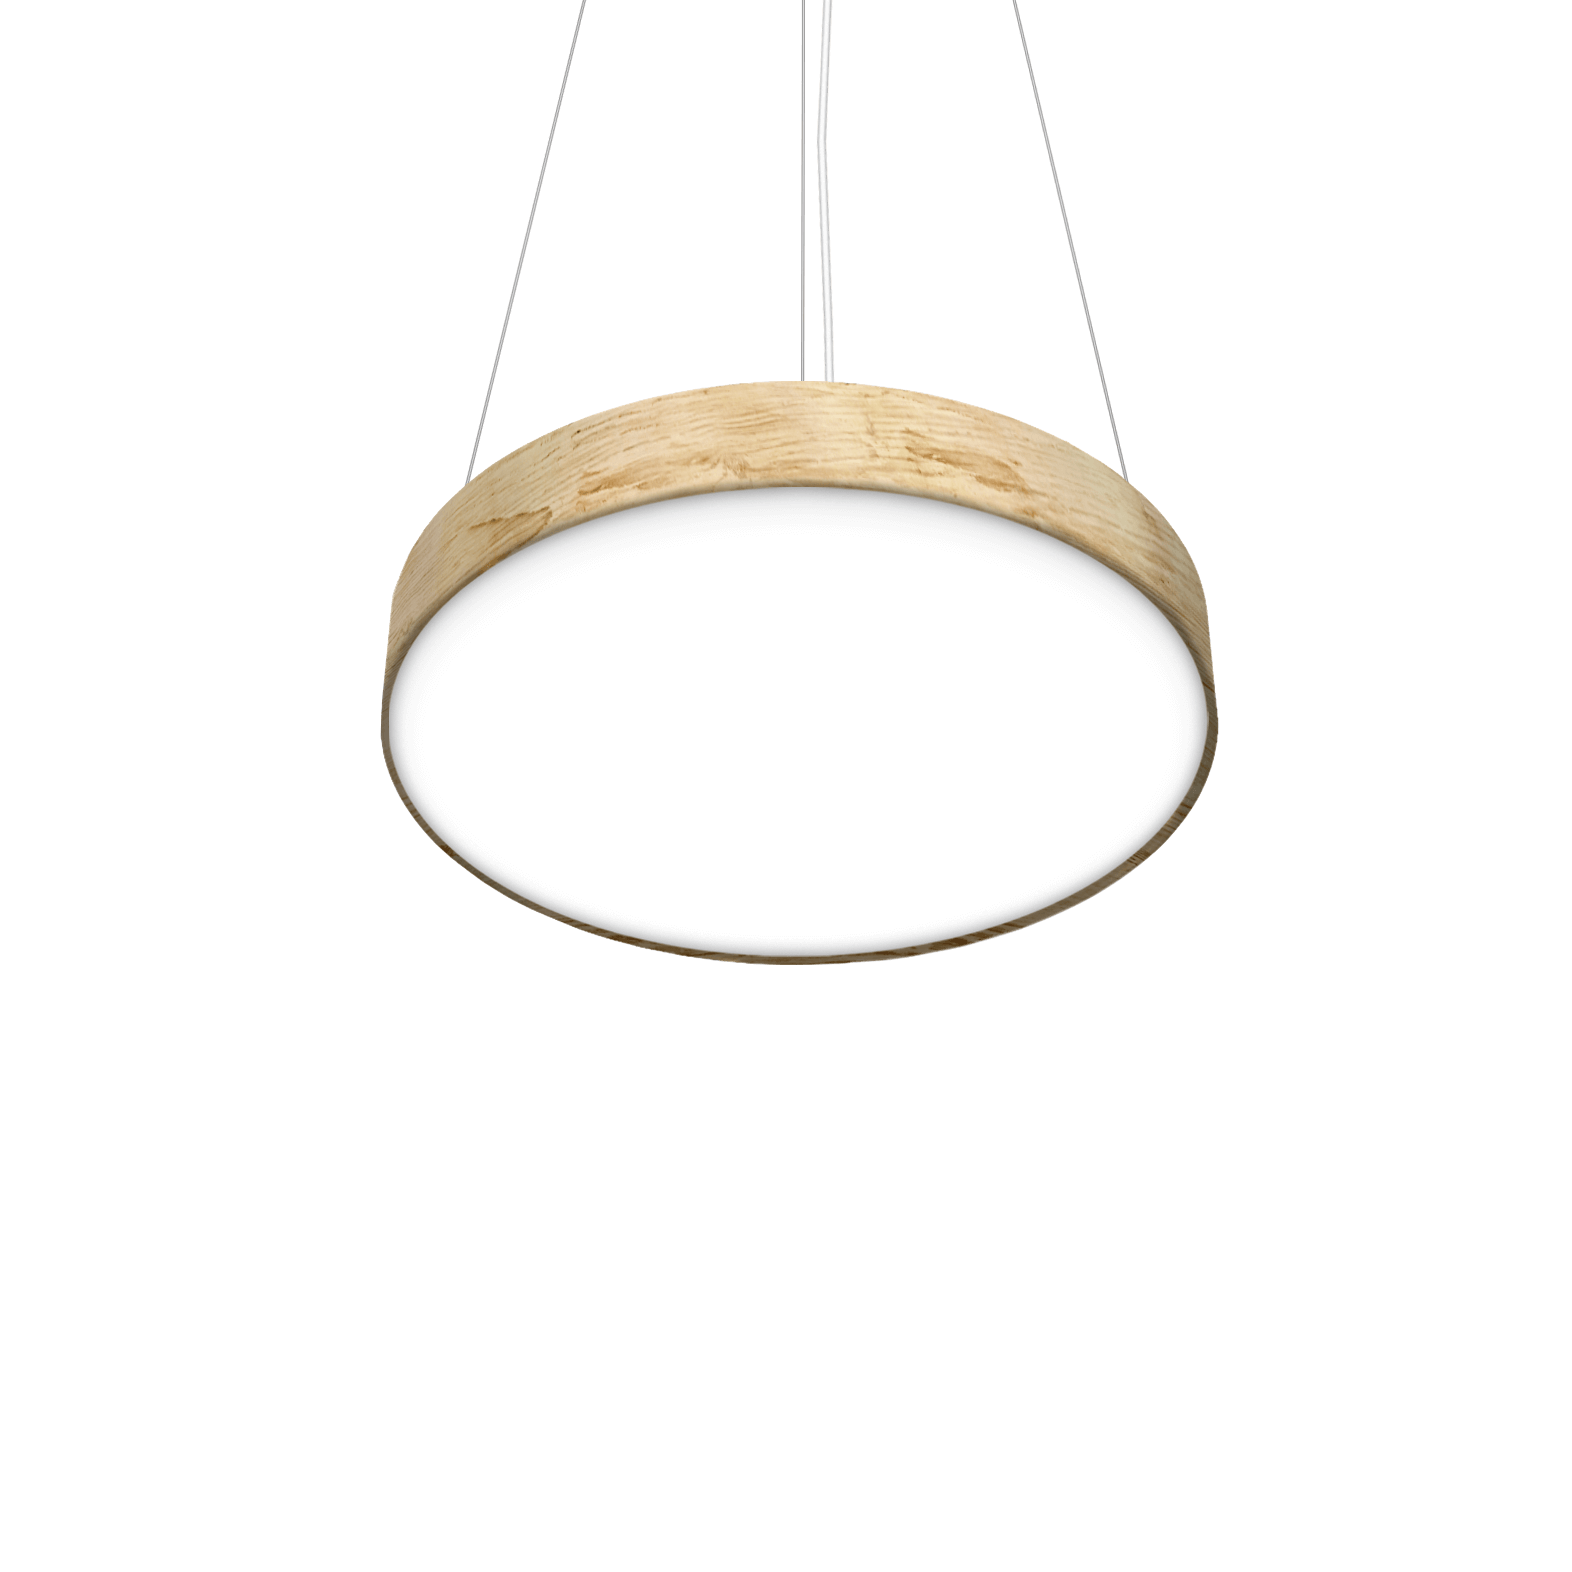 circular pendant LED fixture with a tan wood grain finish